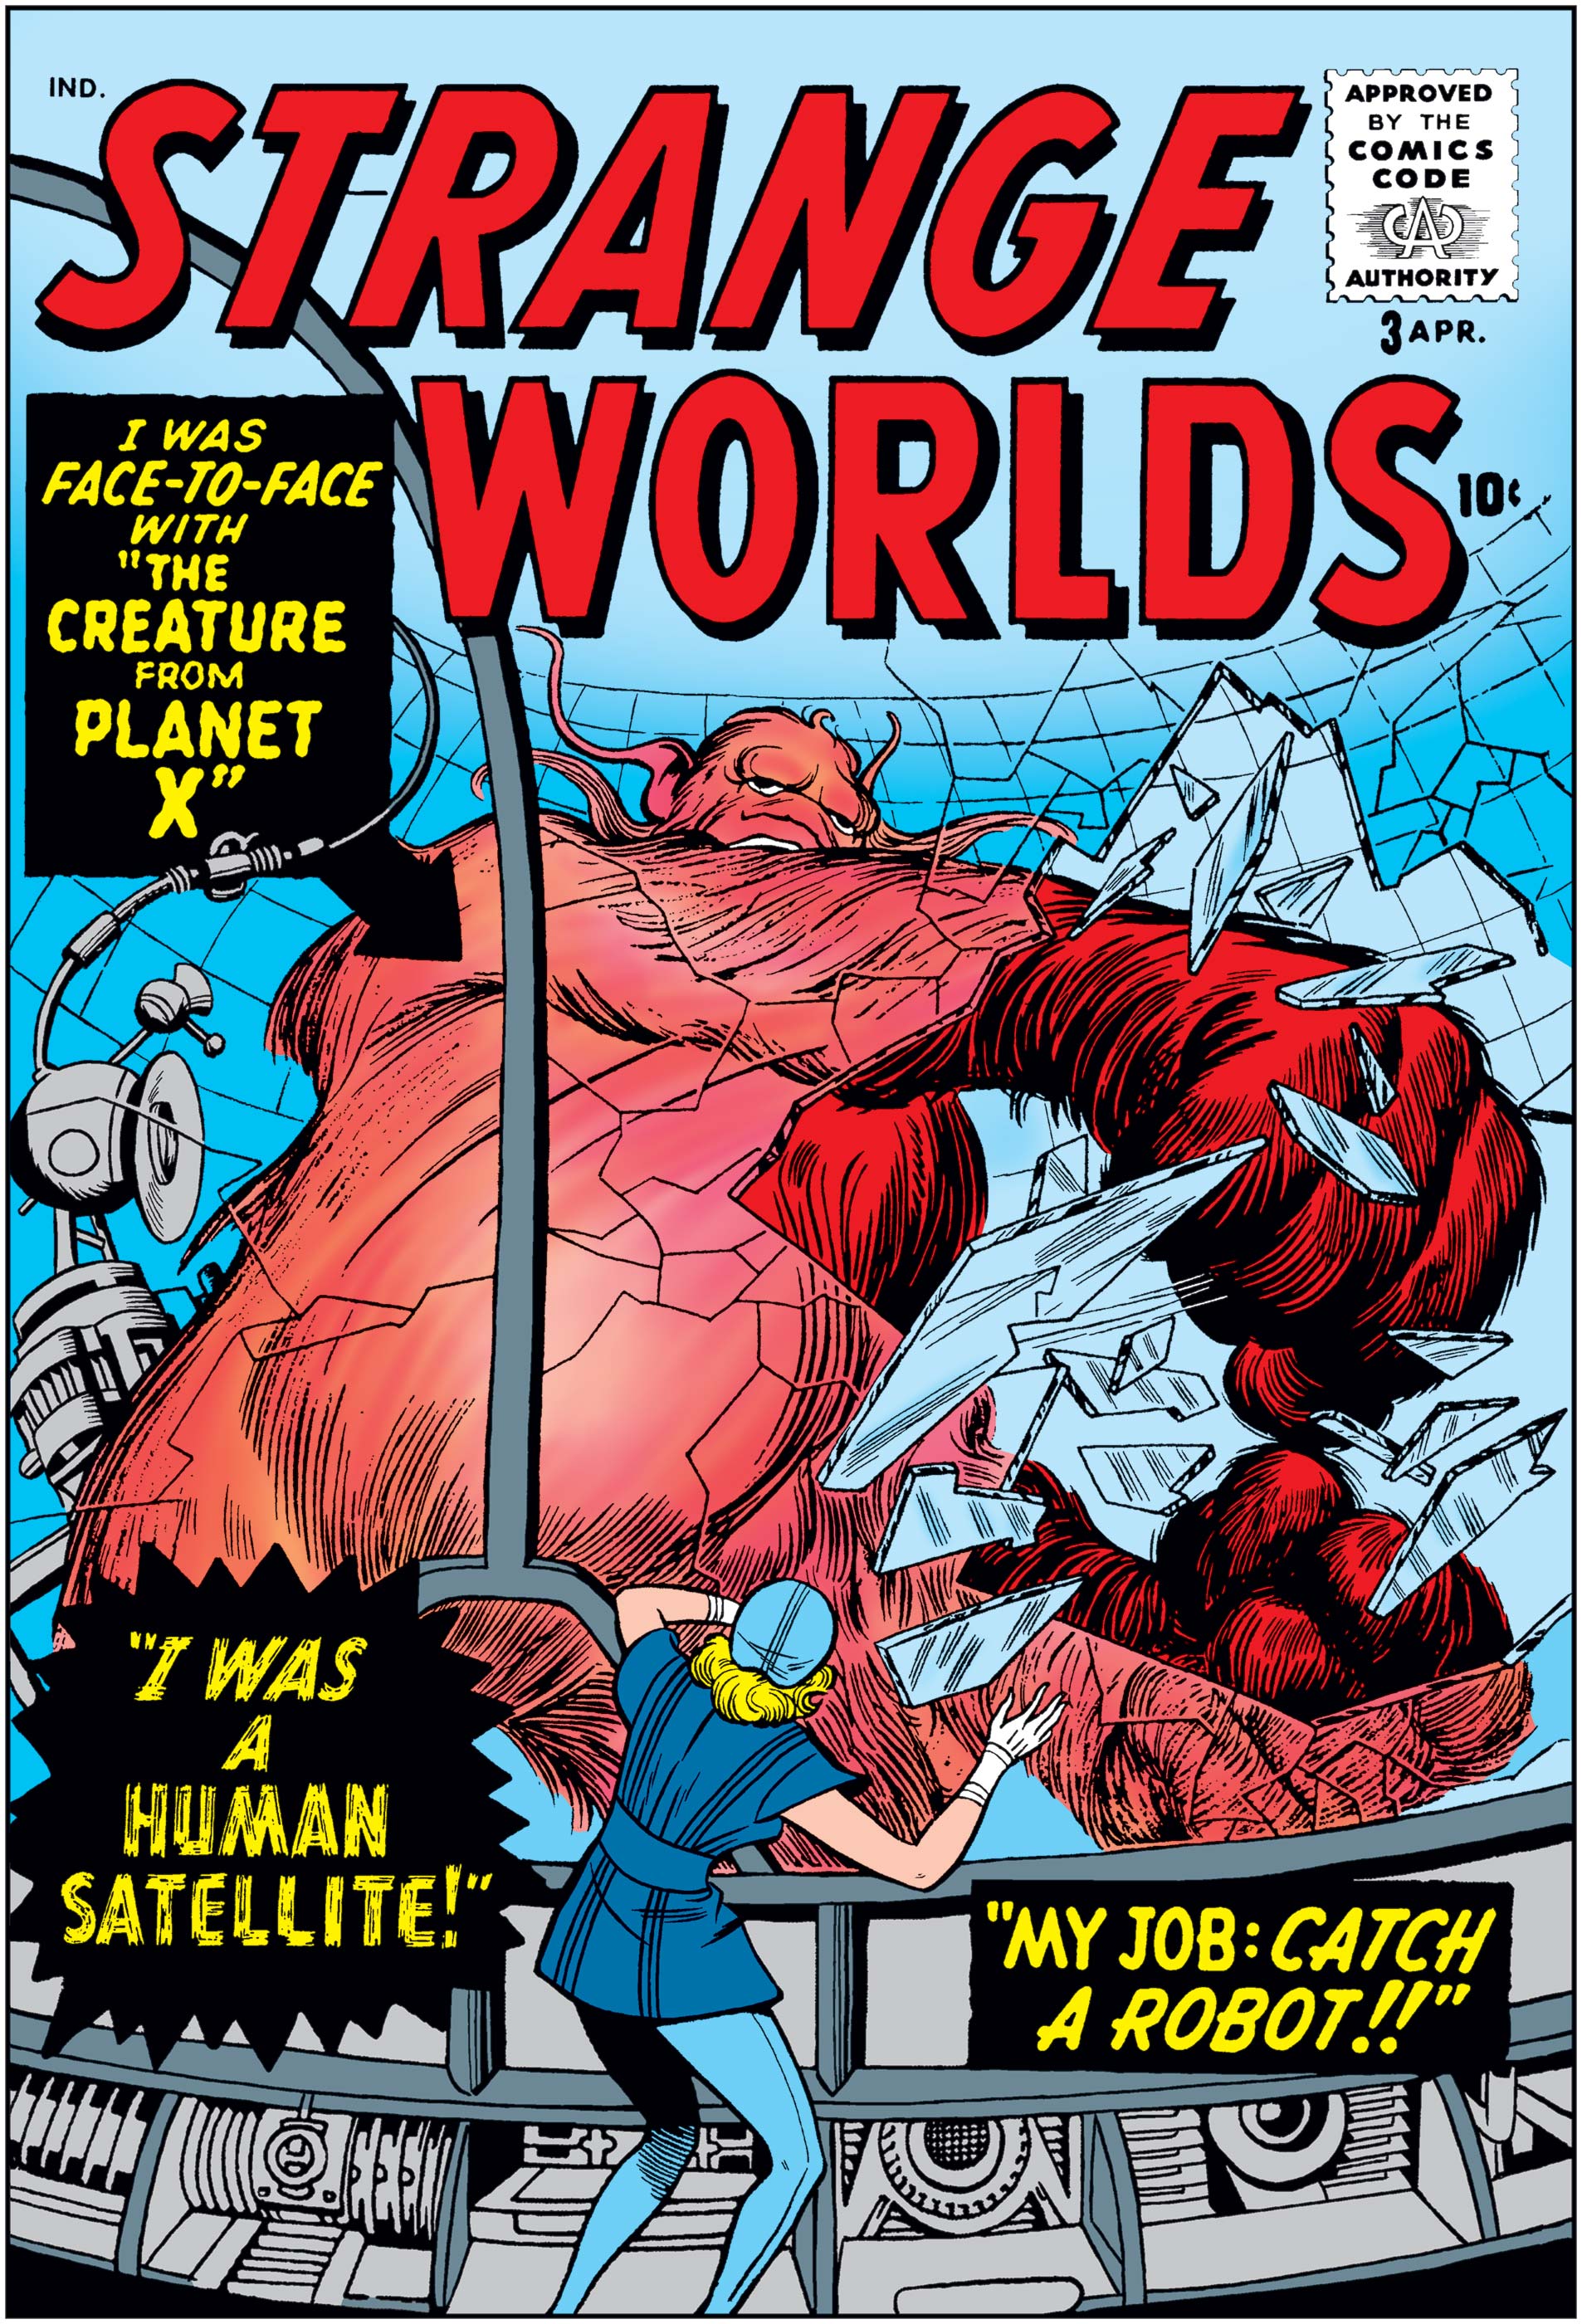 Strange Worlds (1958) #3